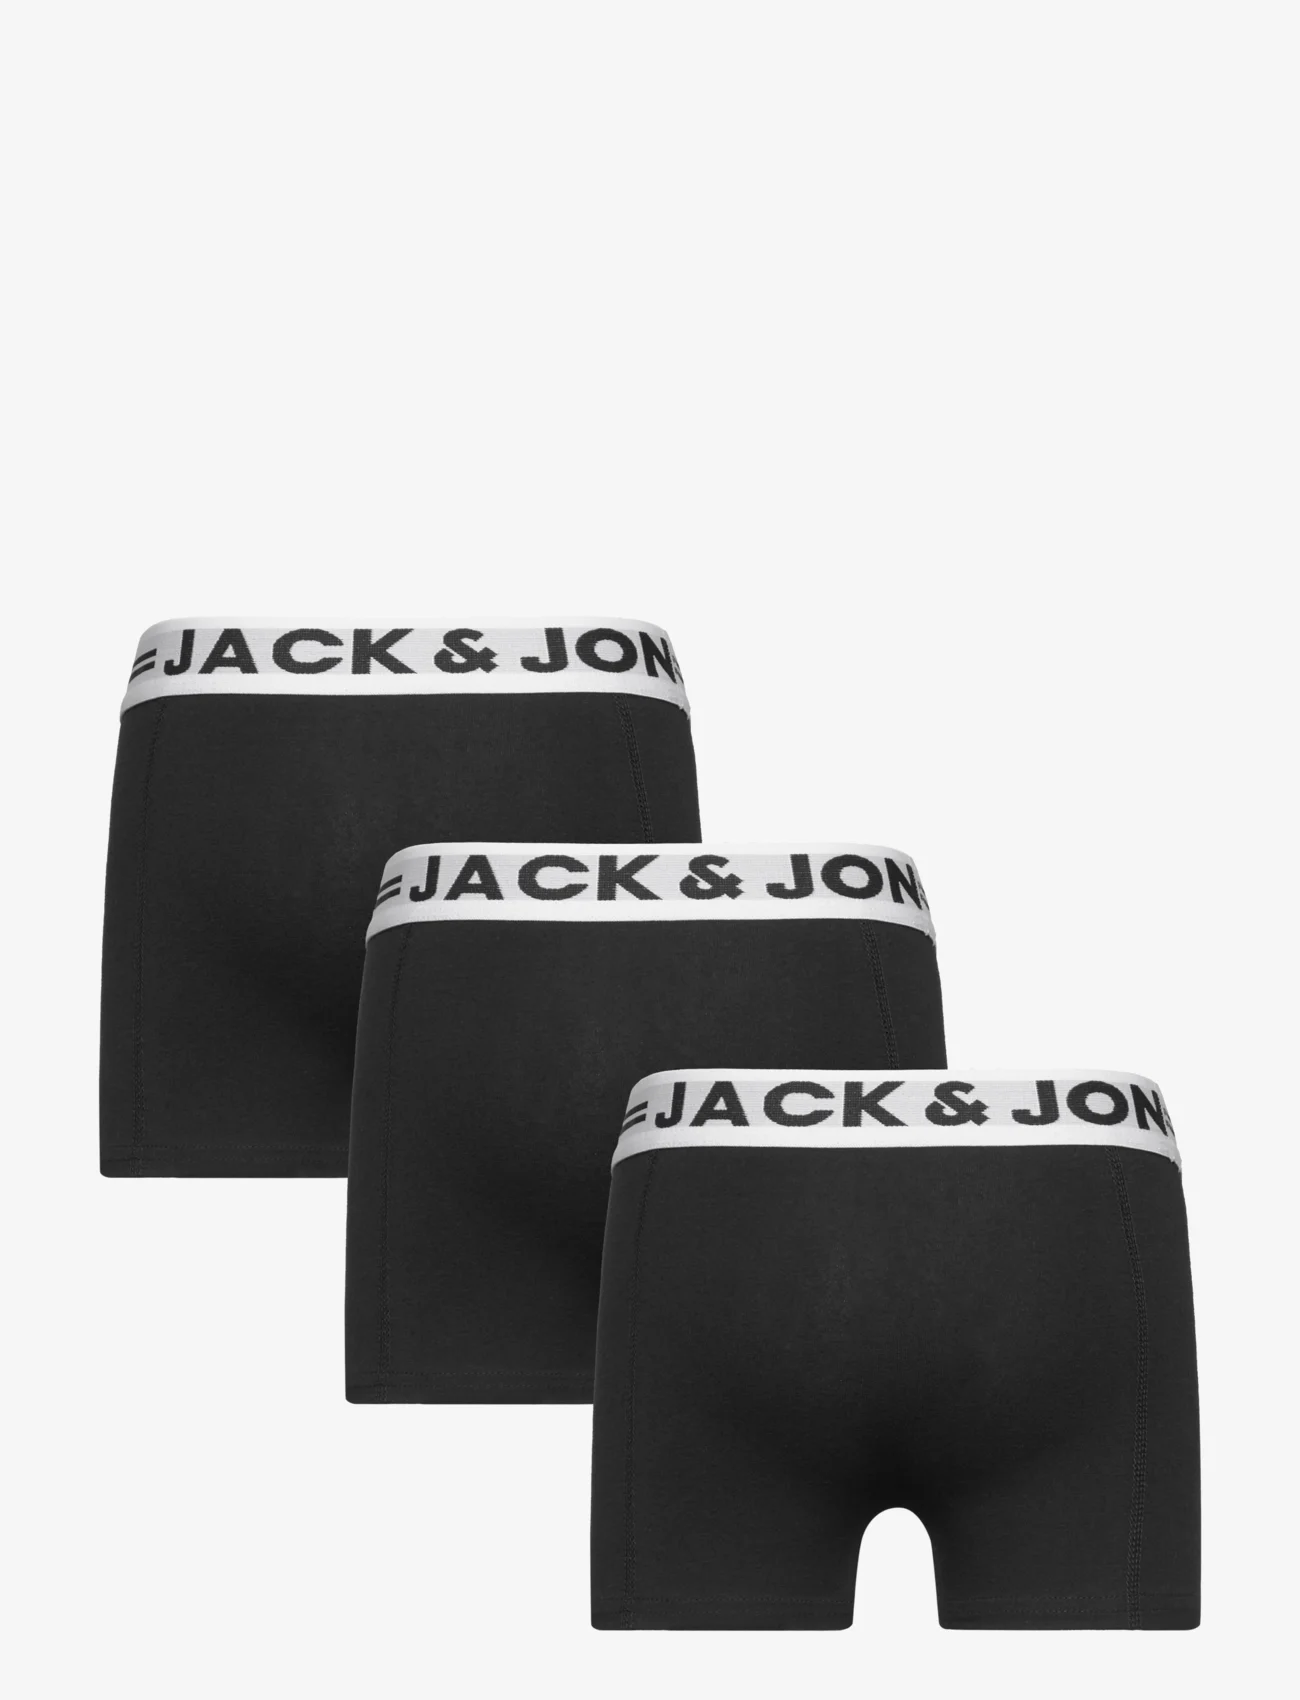 Jack & Jones - SENSE TRUNKS 3-PACK NOOS MNI - bokserit - black - 1